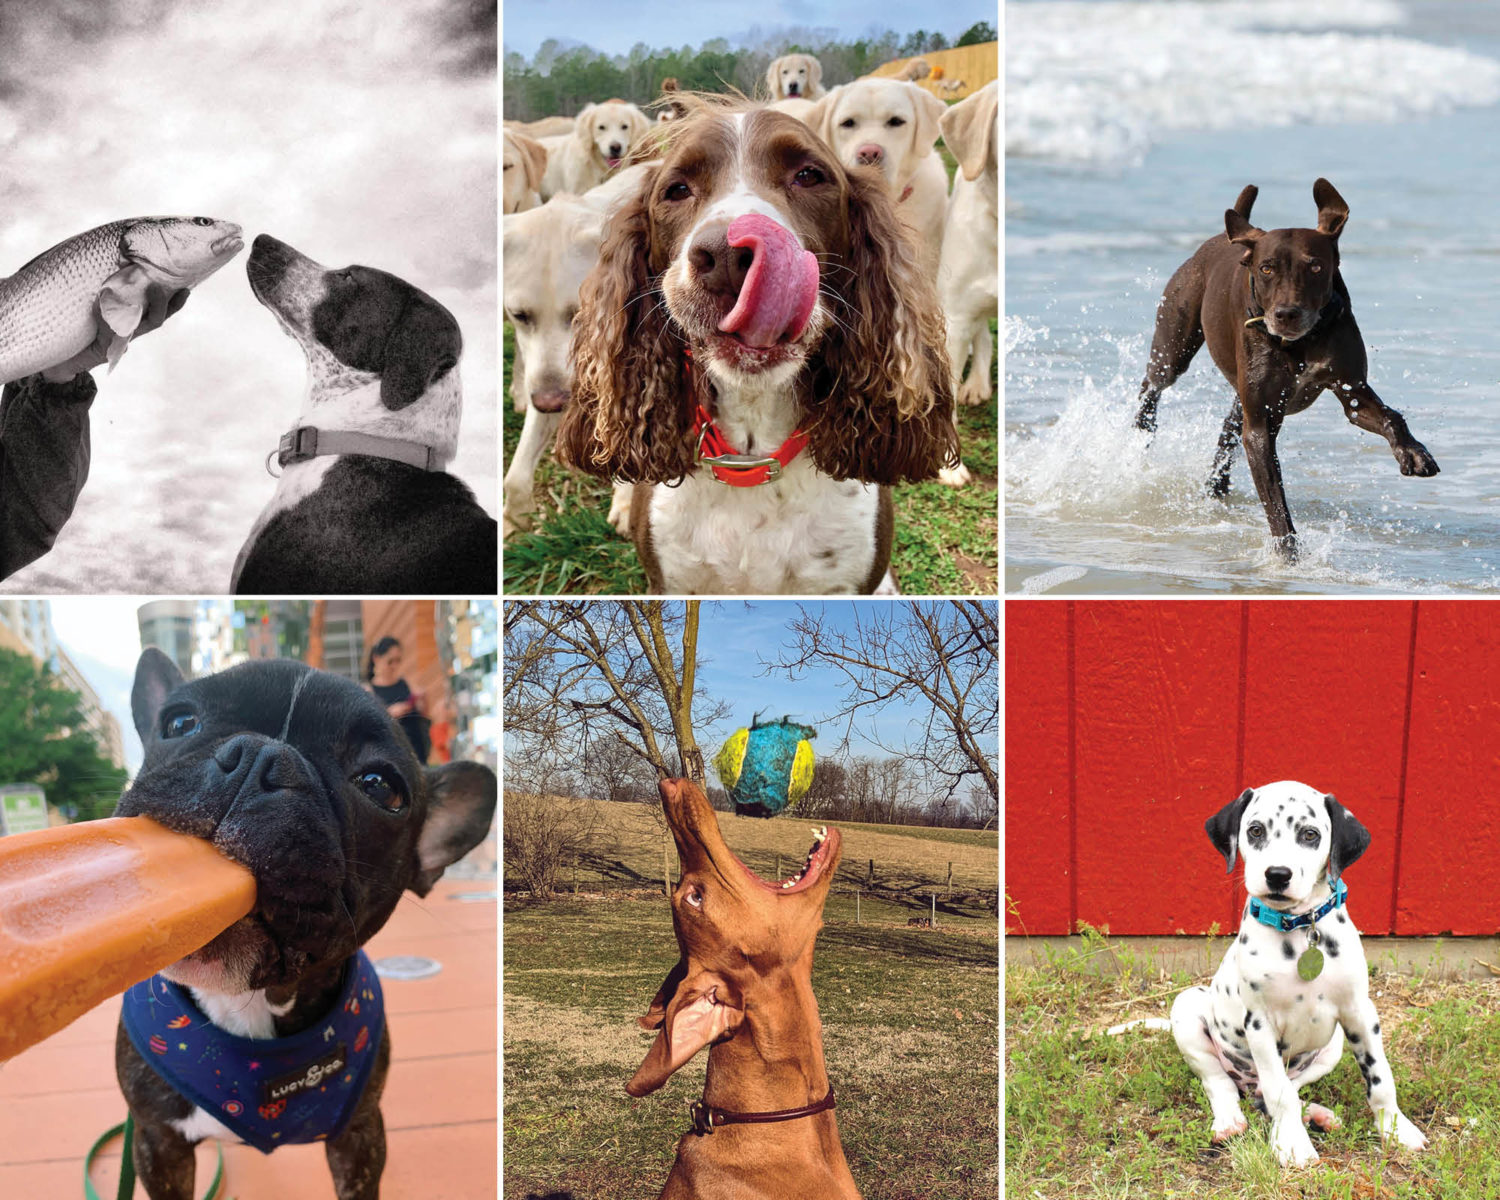 The Good Dog Photo Contest 2019 